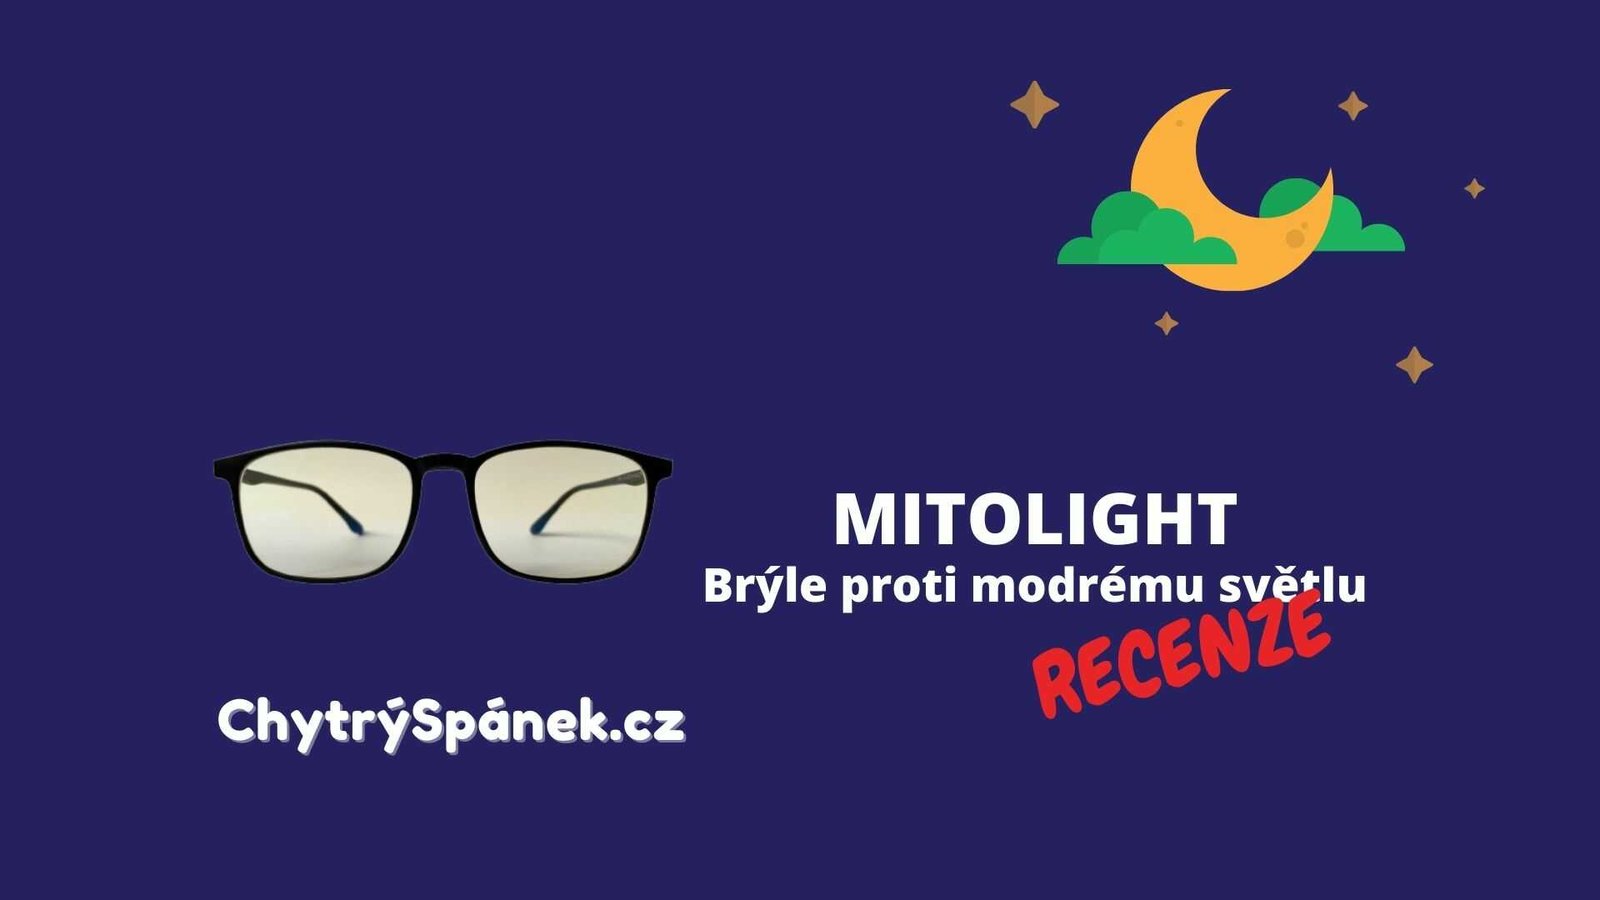 Mitolight Recenze